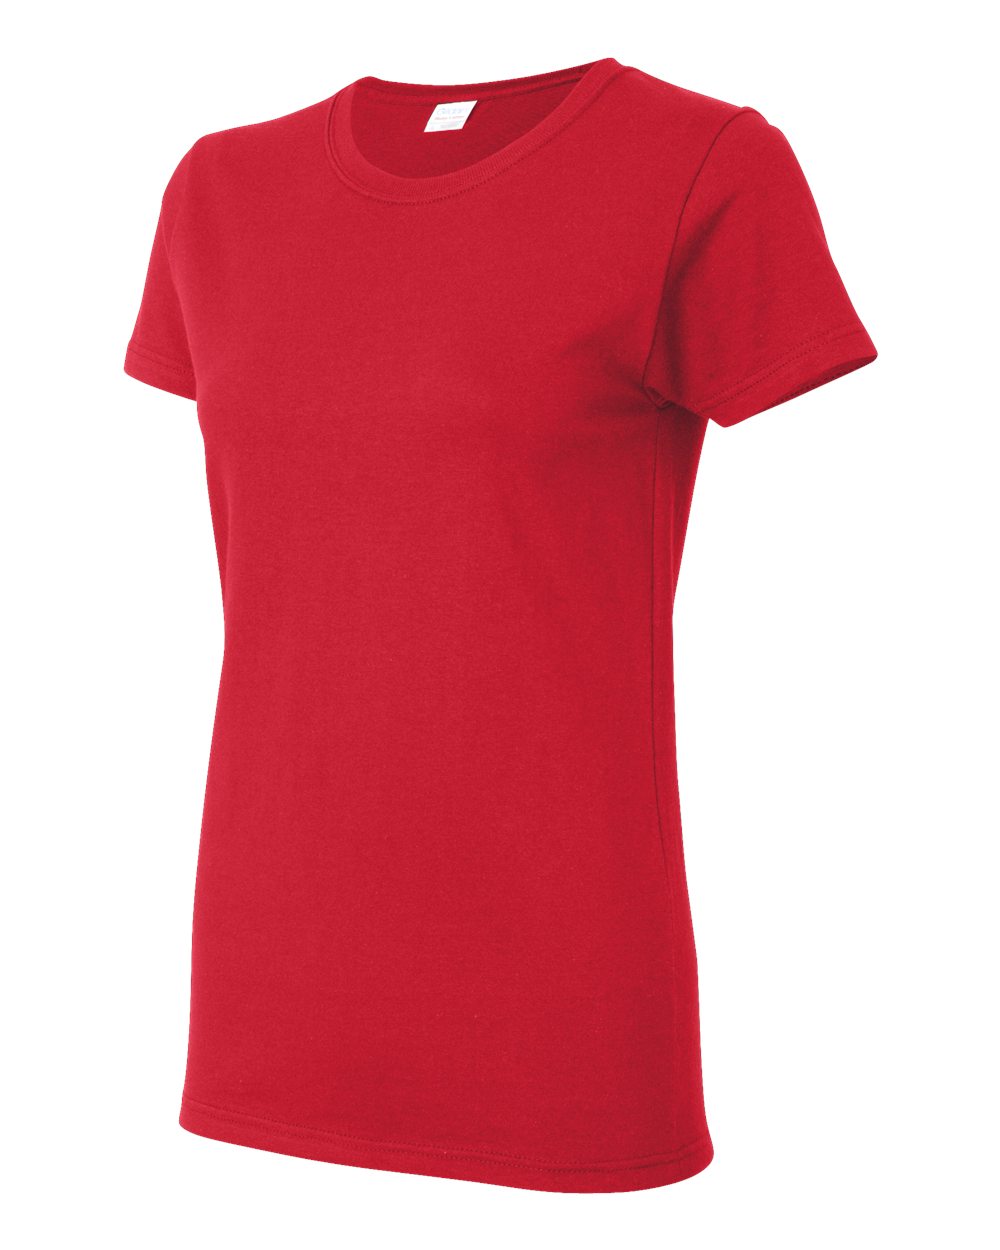 NIB - Women's T-Shirt Short Sleeve - Welcome to Las Vegas Nevada - image 3 of 5